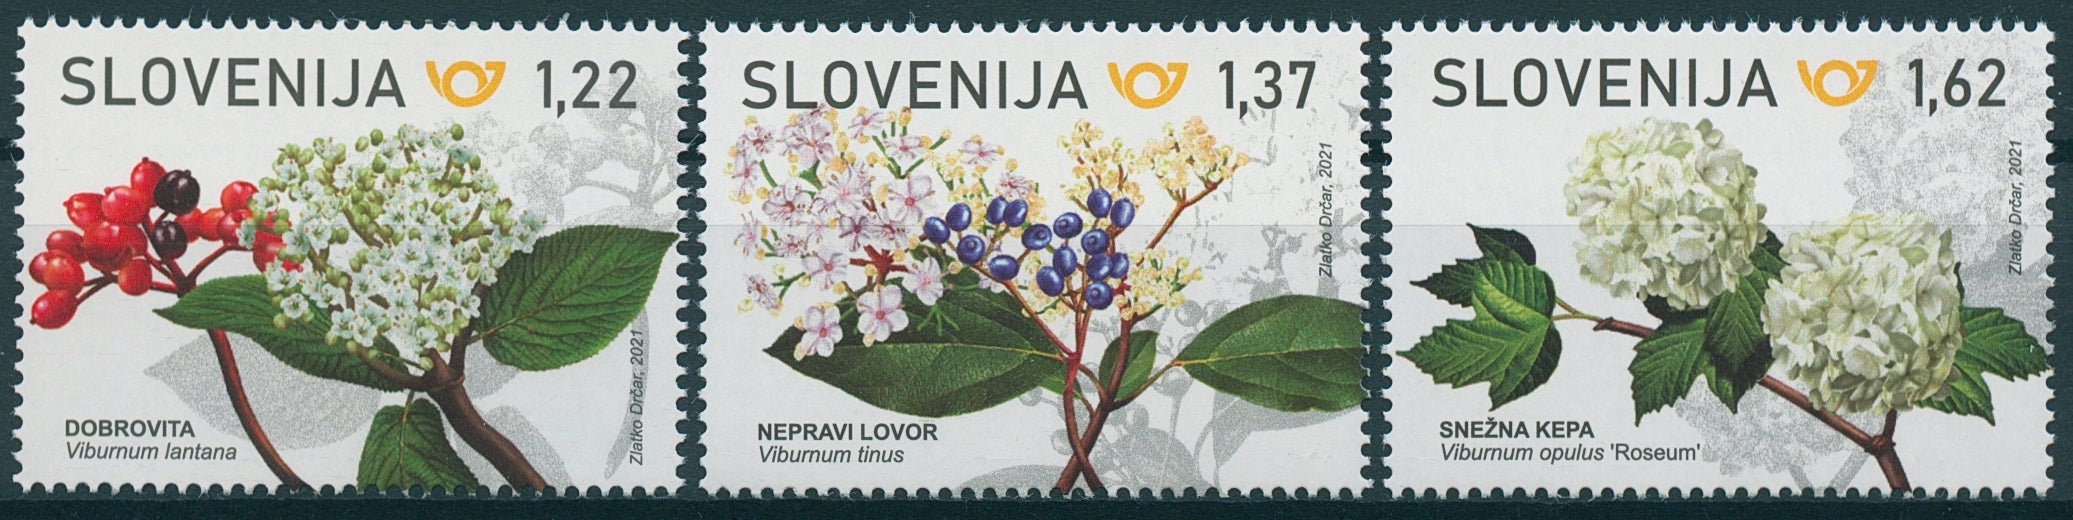 Slovenia Flowers Stamps 2021 MNH Laurustine Wayfaring Snowball Tree 3v set